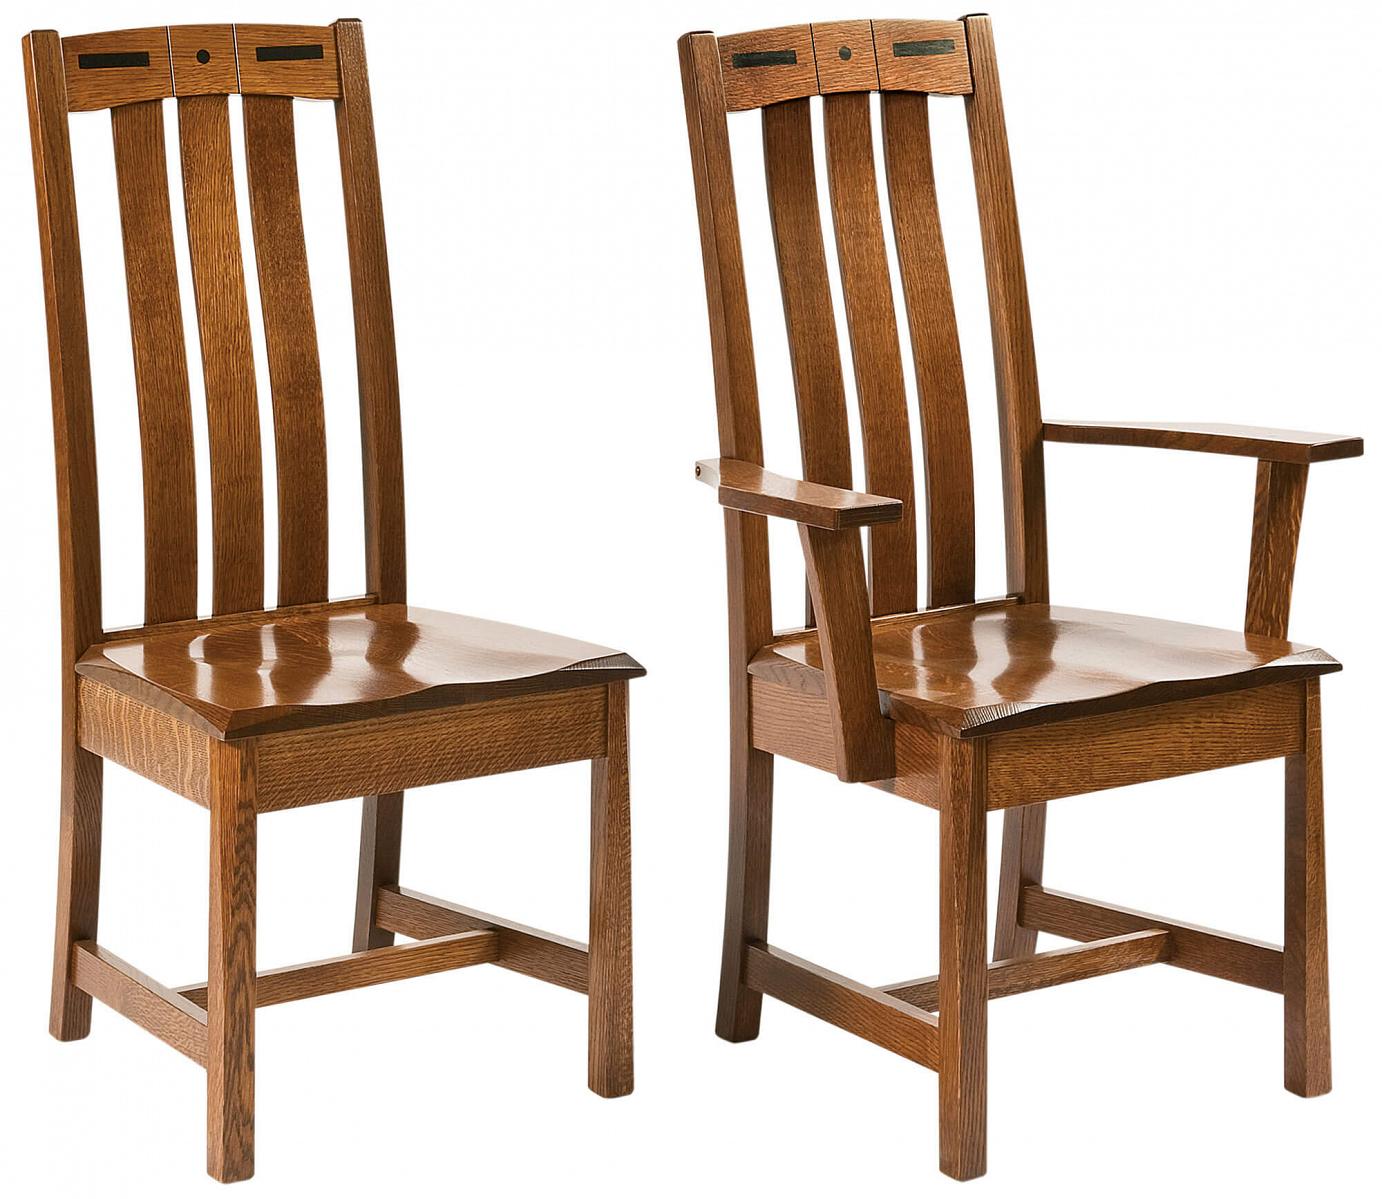 RH Yoder Lavega Chairs